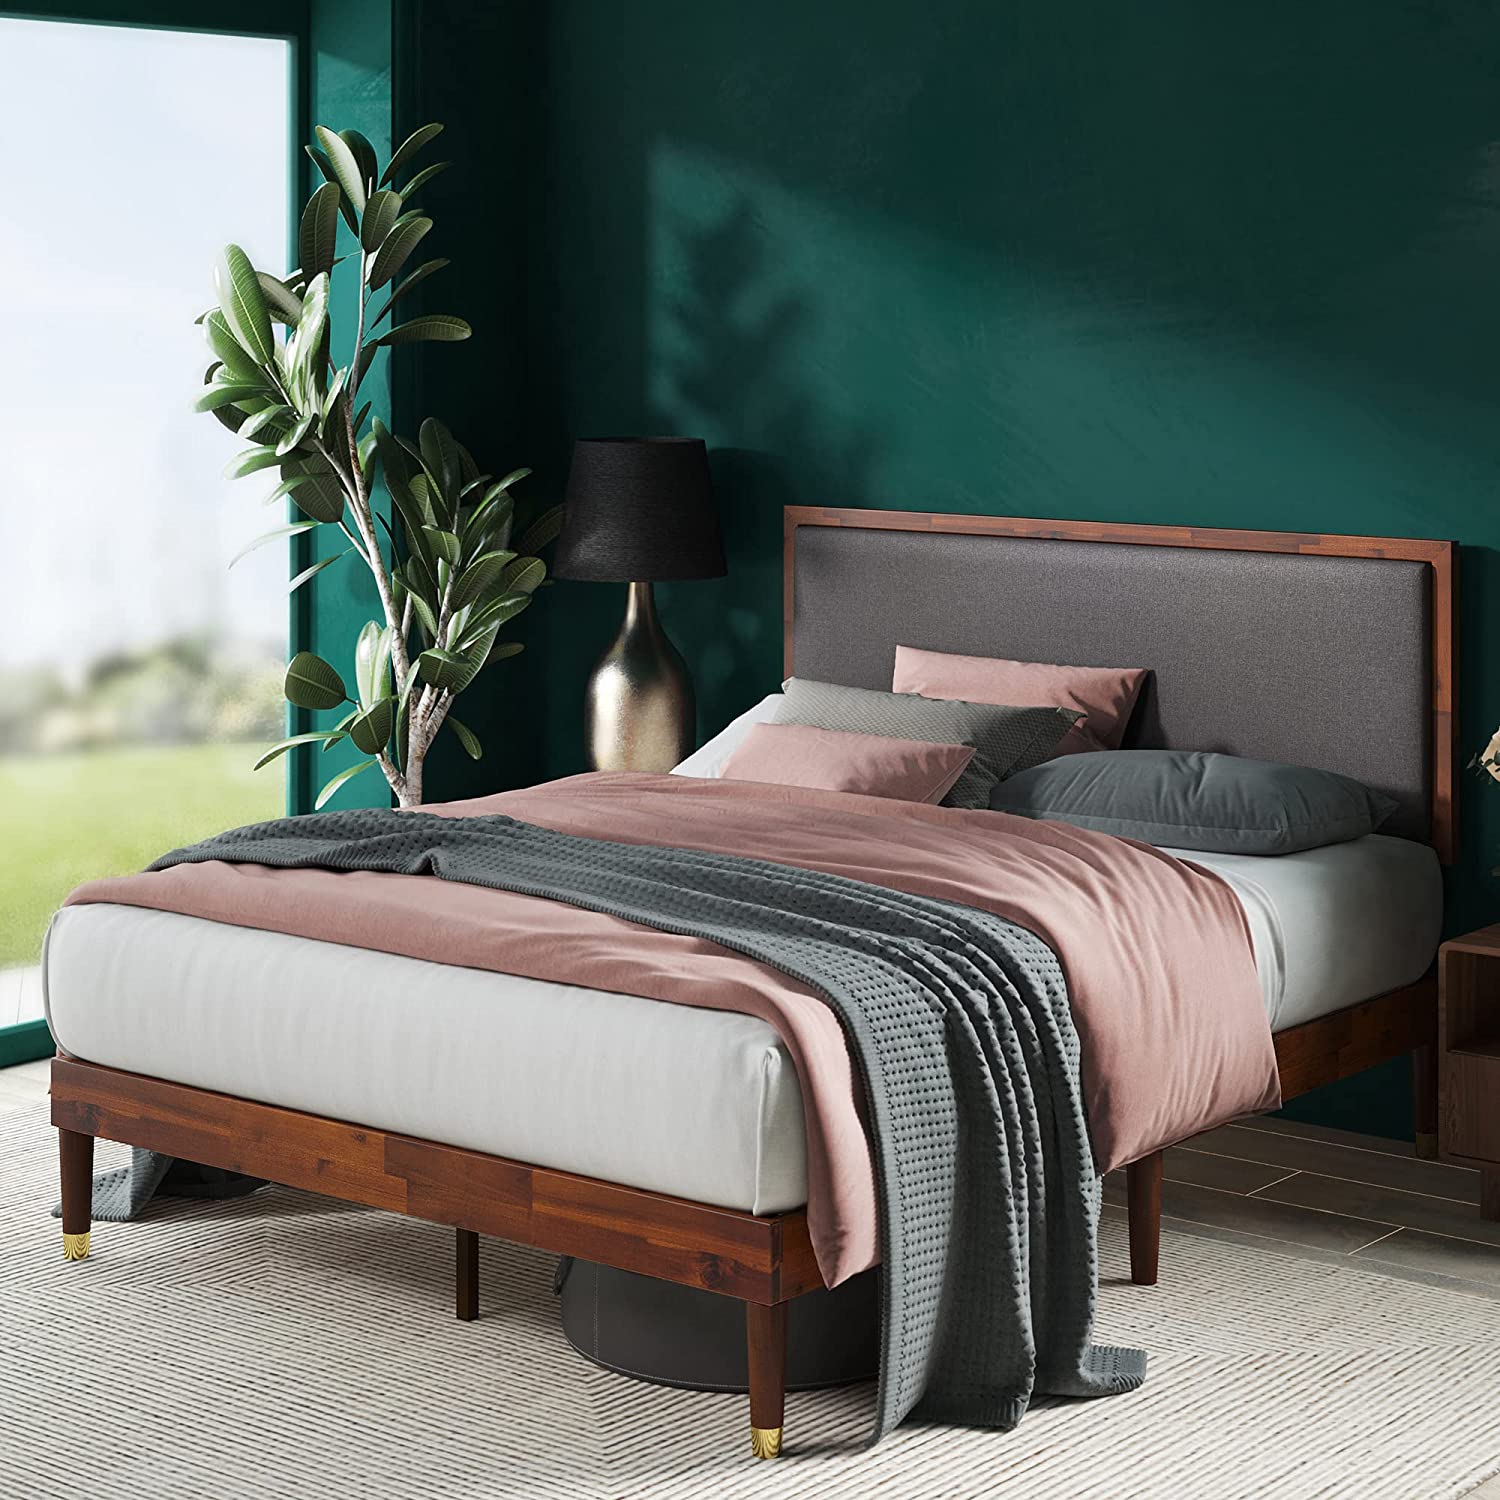 ZINUS Raymond Wood Platform Bed Frame with Adjustable Upholstered Headboard, Brown